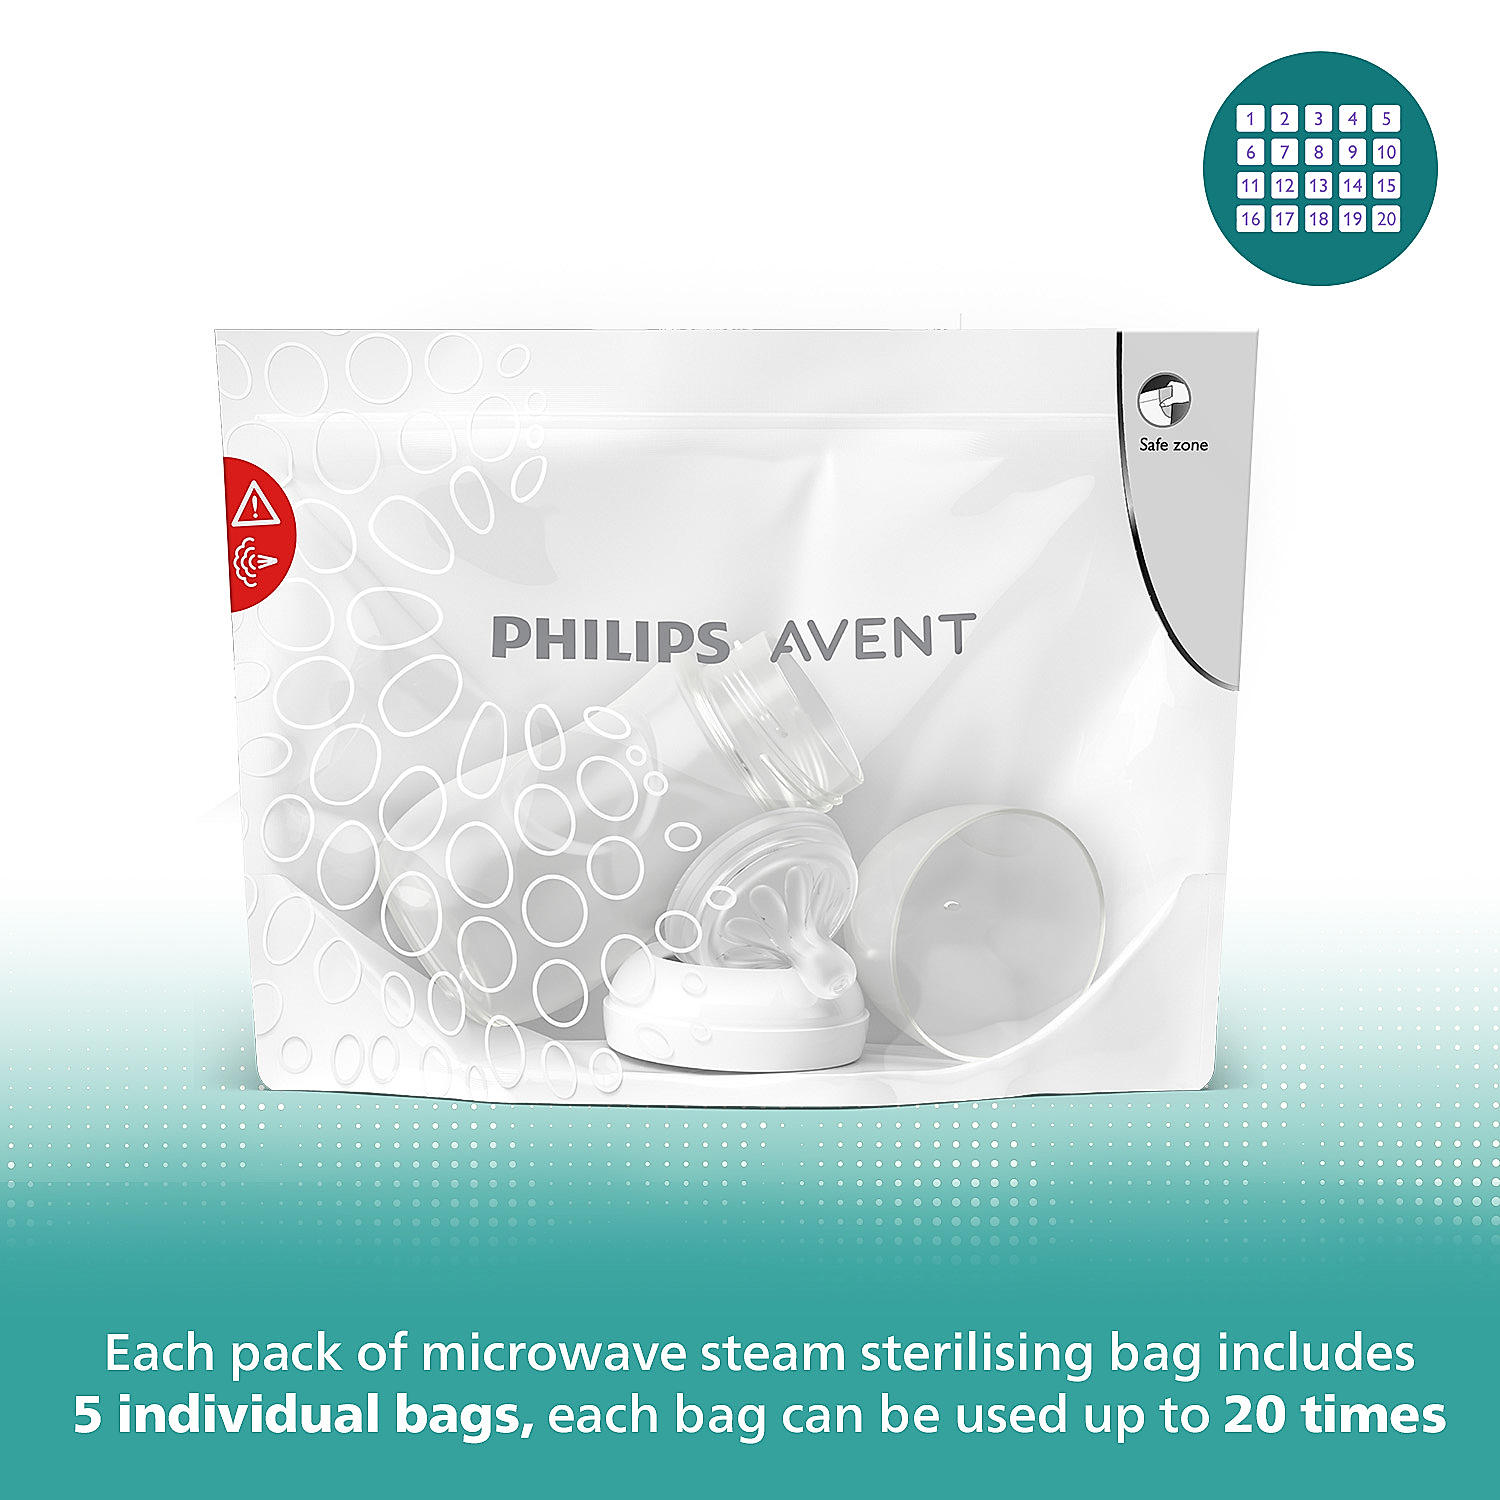 Buy Philips Avent Microwave Online Sterilizing E-shop Philips Bag, at SCF297/05